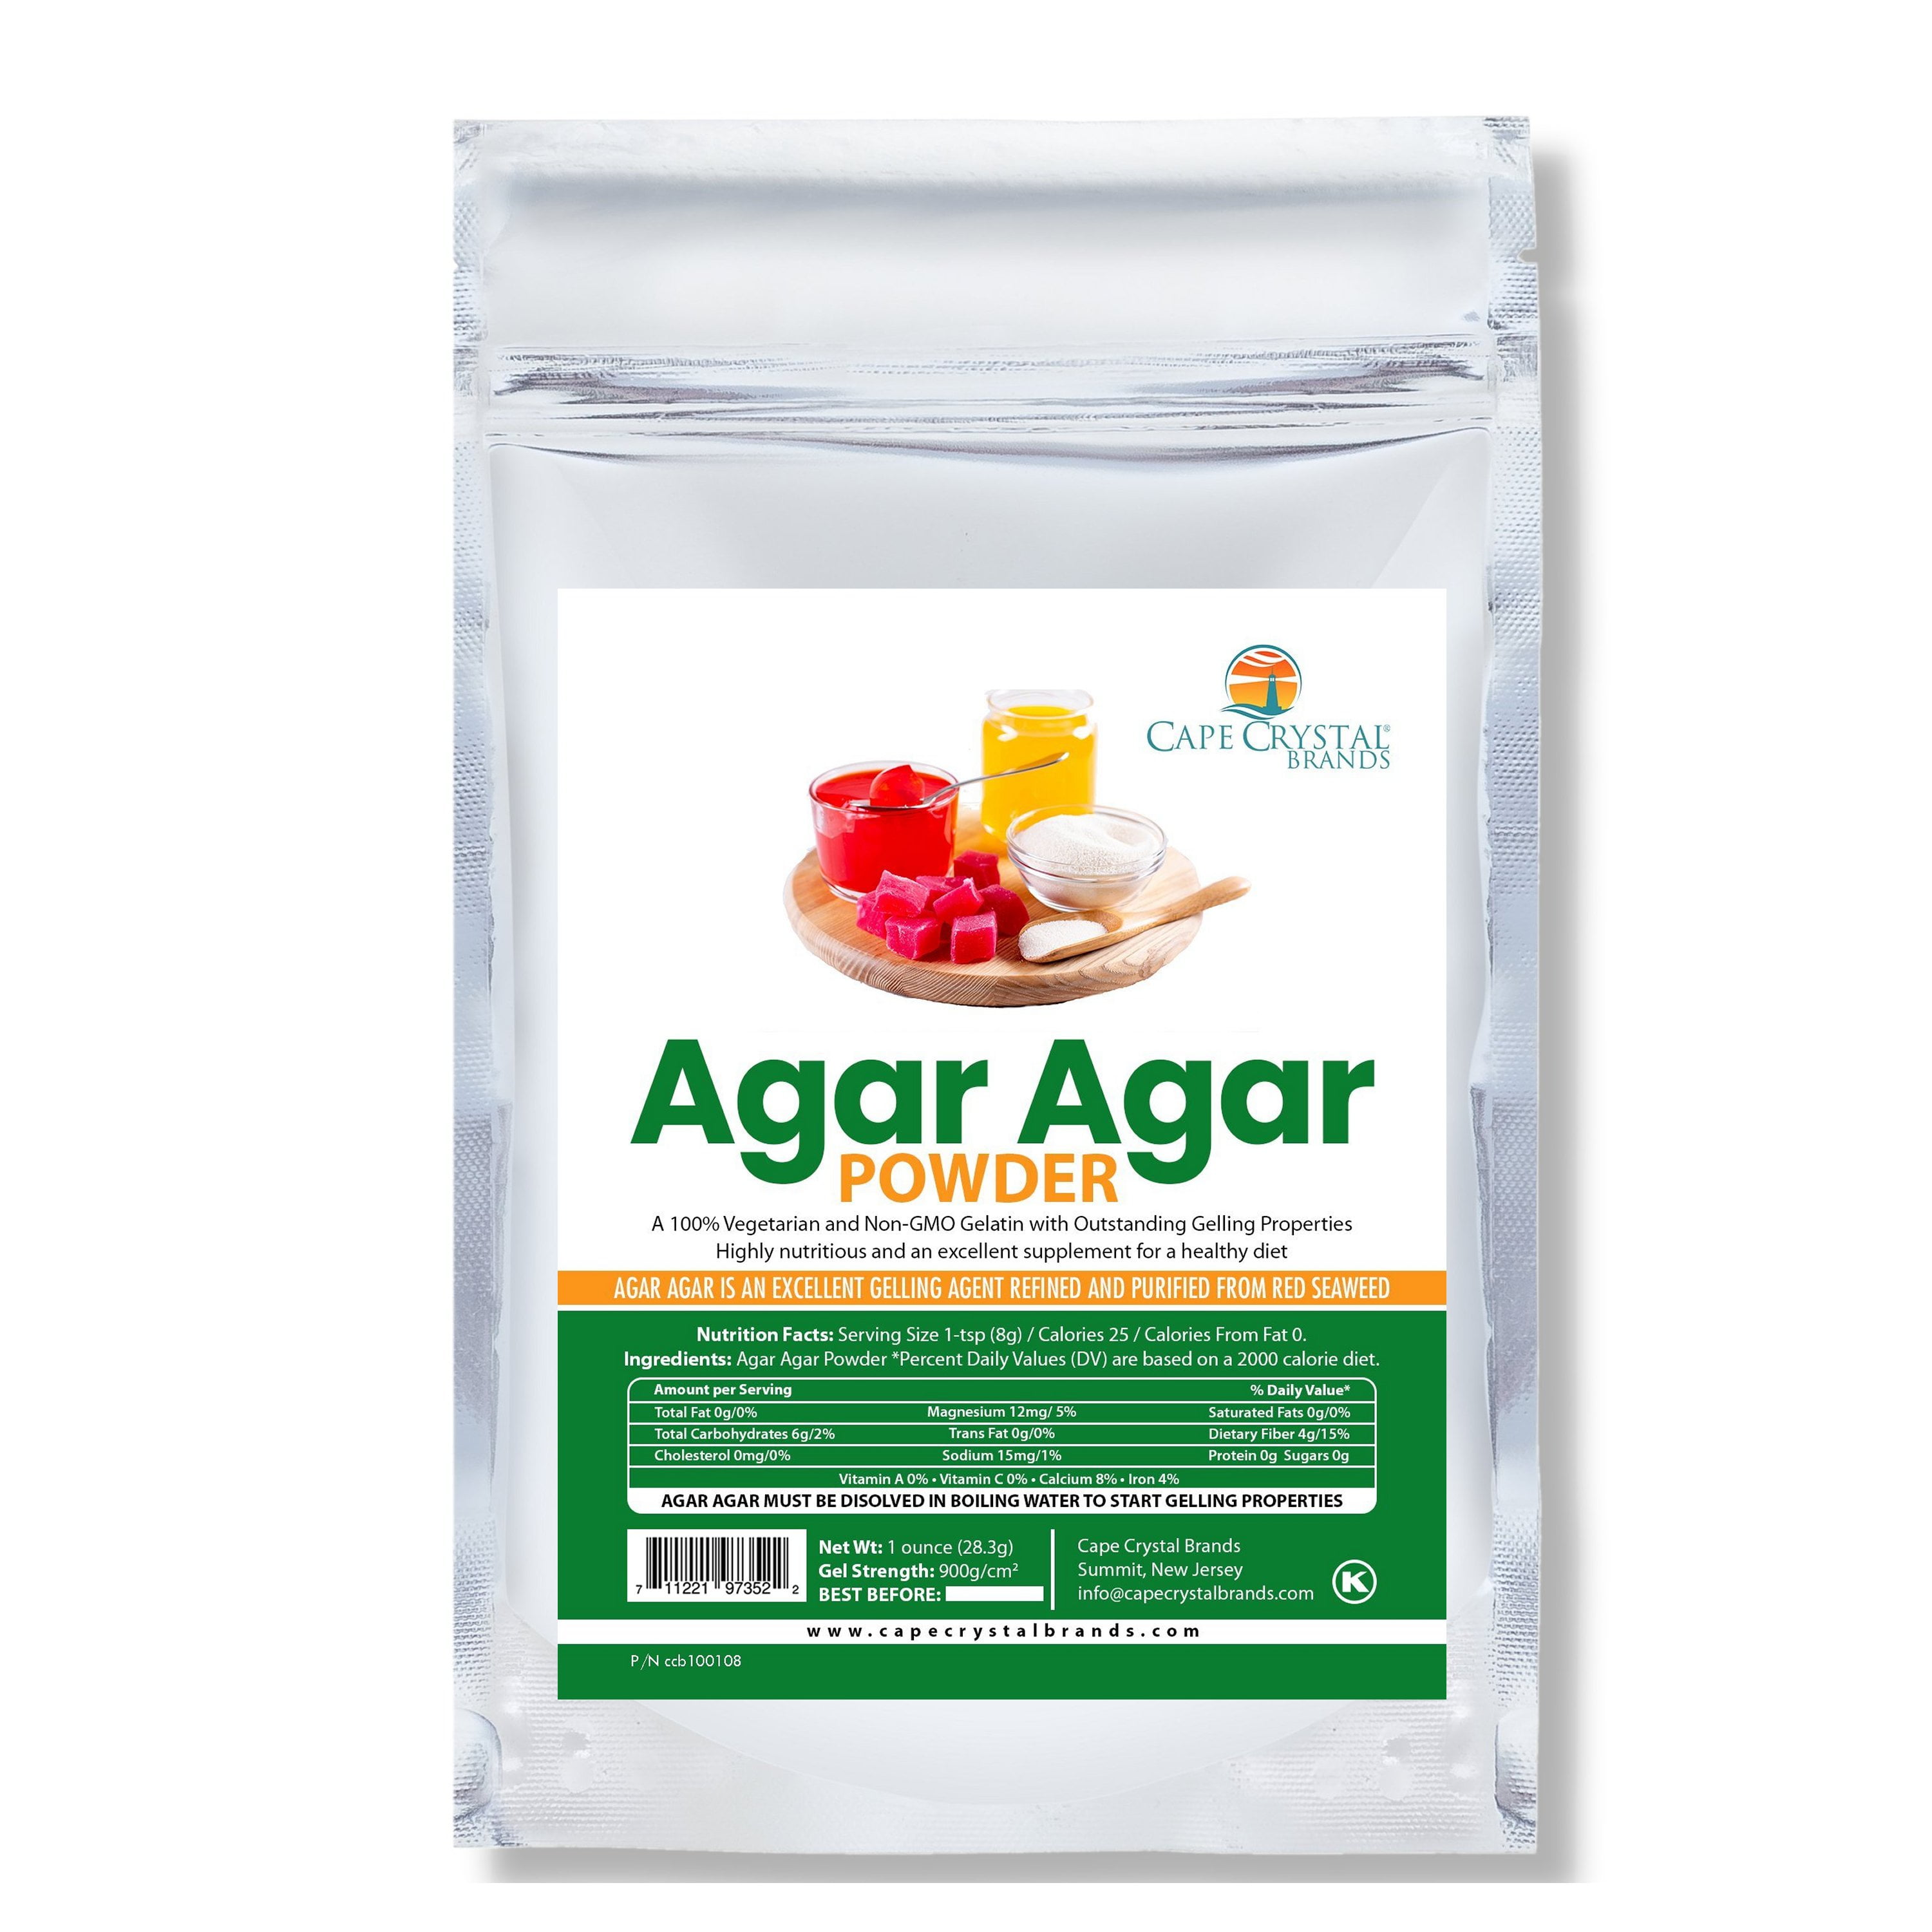 Vegan The Ingredients Centre Agar Agar Powder 10g Evaluation Pure Food Grade 